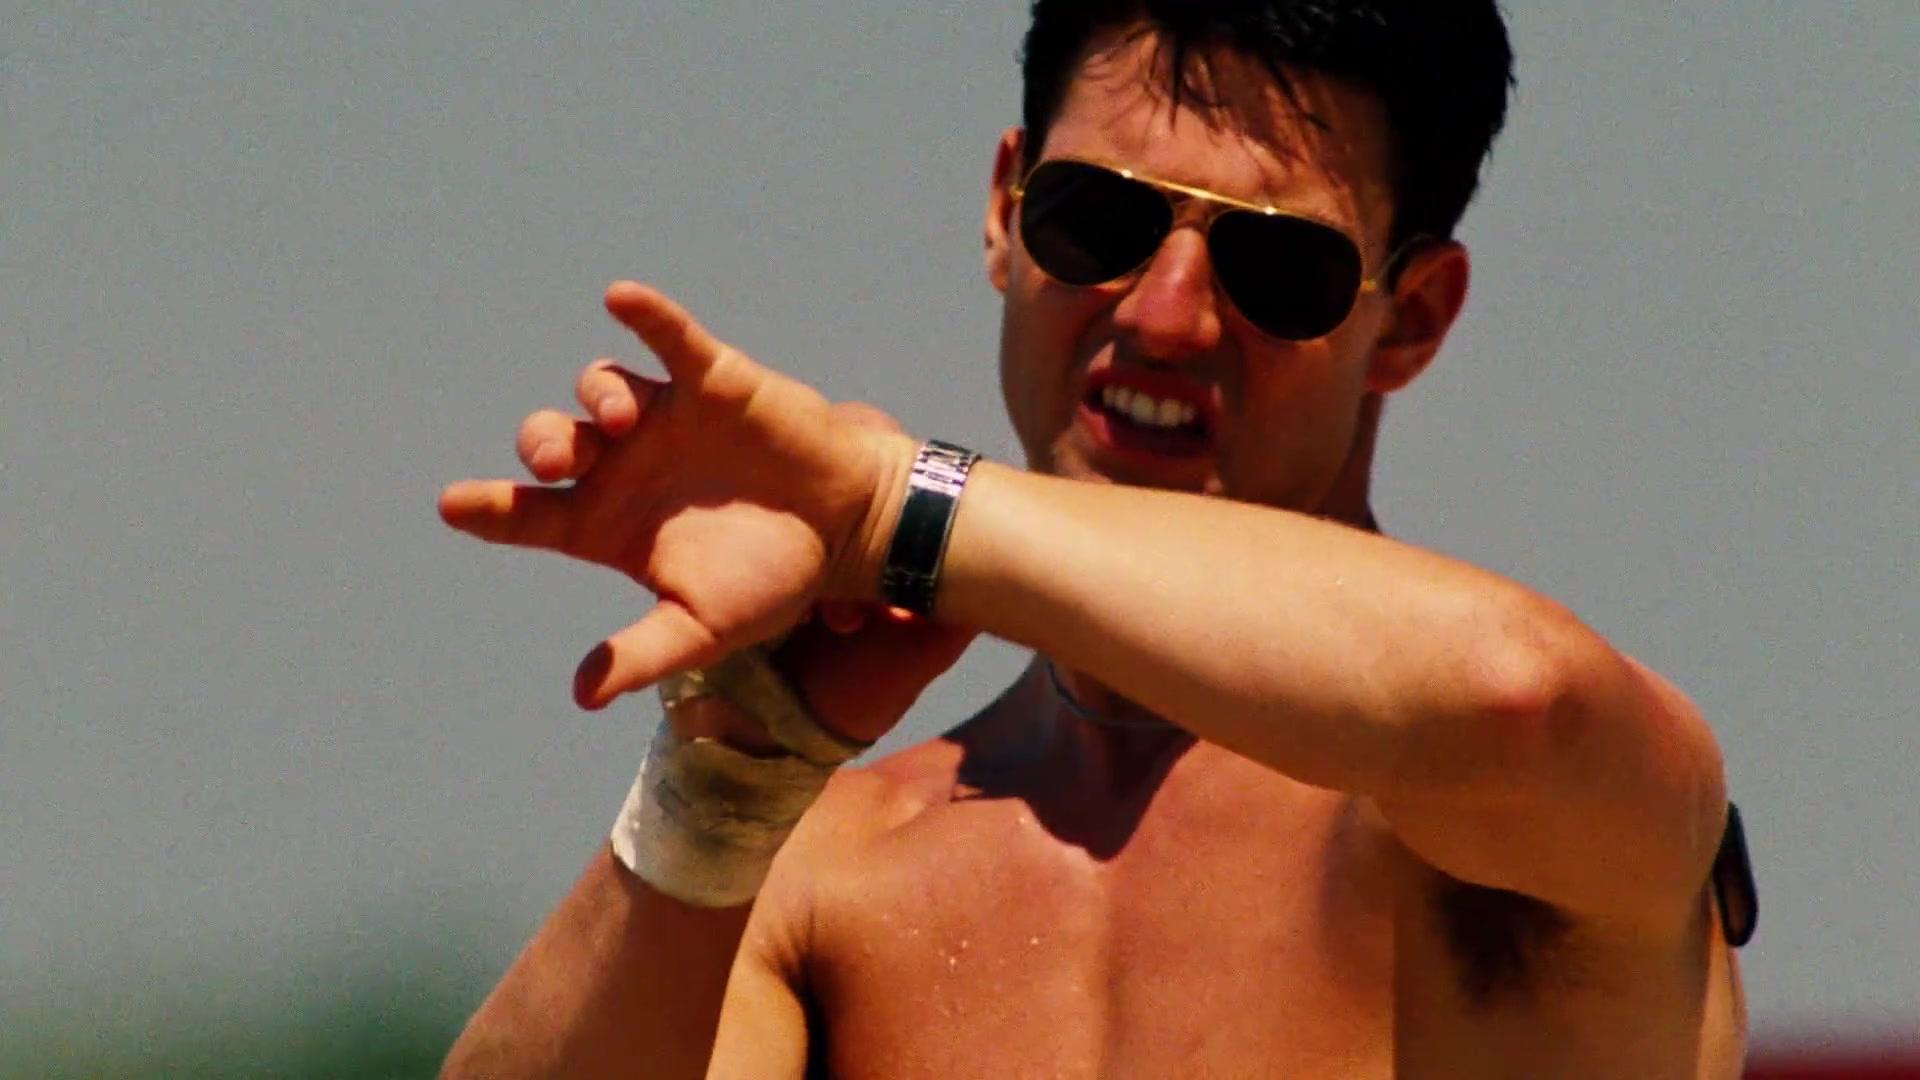 Ray-Ban Aviator 3025 Sunglasses Worn By Tom Cruise As Pete “Maverick”  Mitchell In Top Gun (1986)